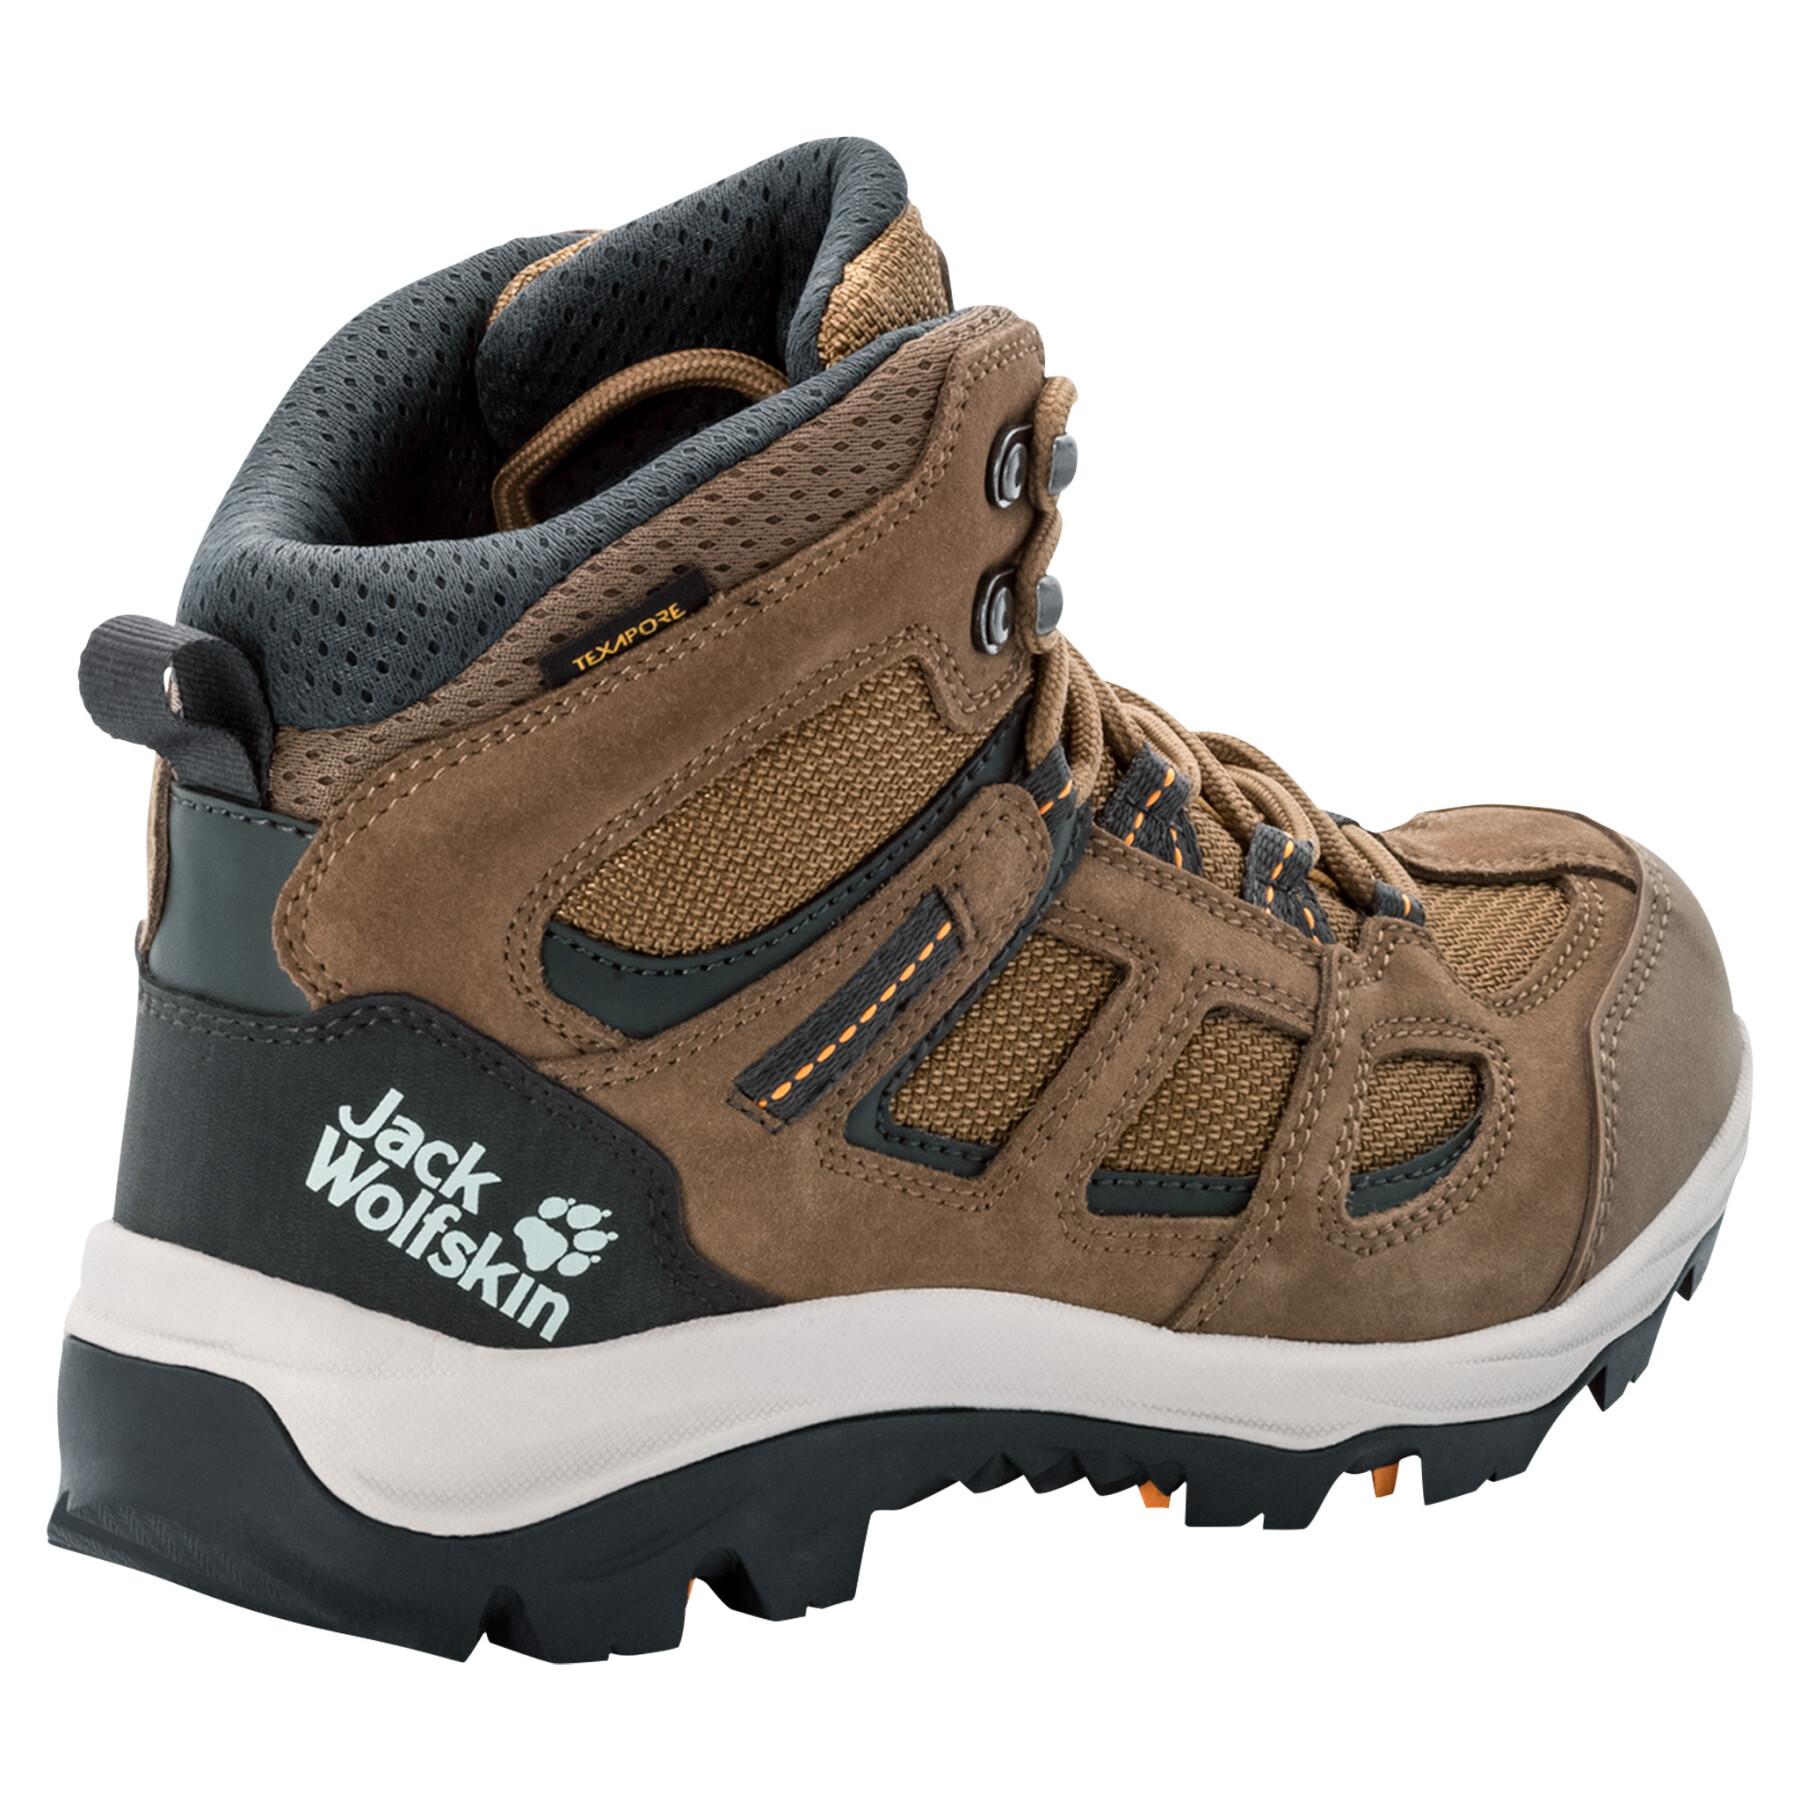 Women's hiking shoes Jack Wolfskin vojo 3 texapore mid